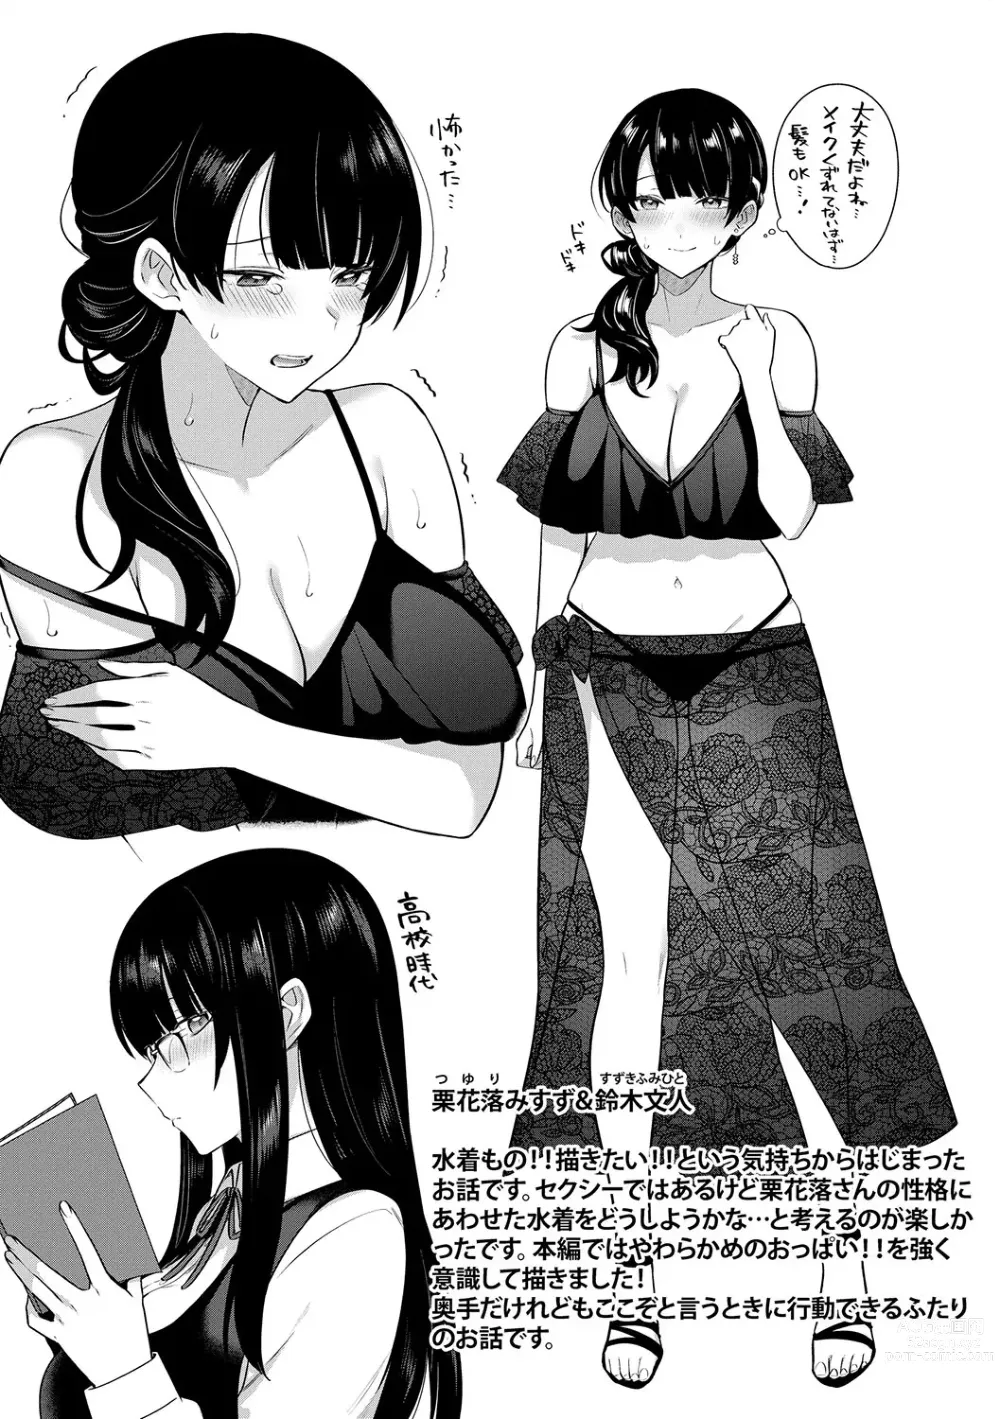 Page 238 of manga Tsubomi Zakari +  Digital Tokusouban  Gentai Tokuten  Character Settei Shuu & Raugh Shuu